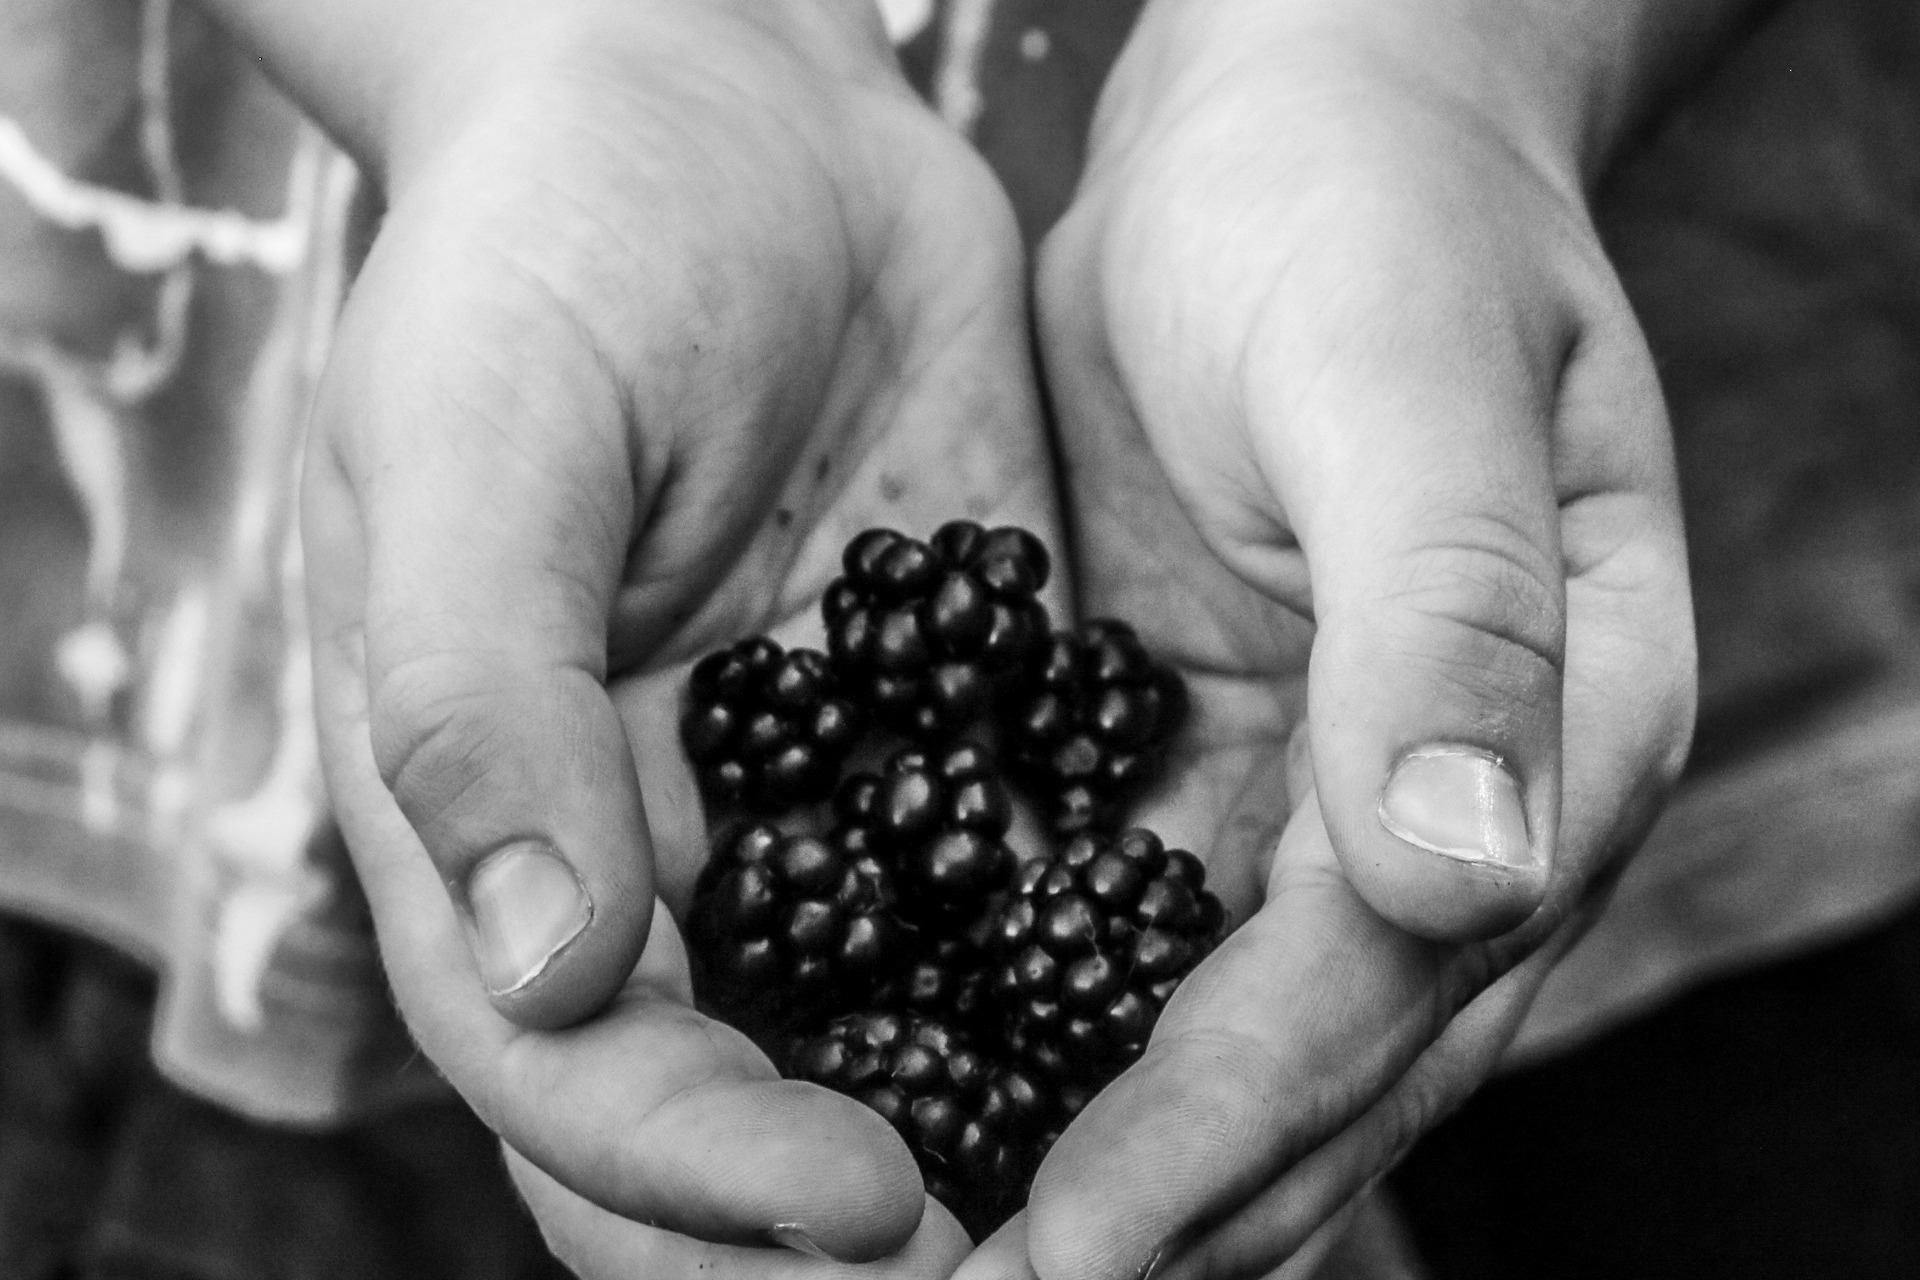 Blackberries in hands at cornfields school in Ashford, Kent